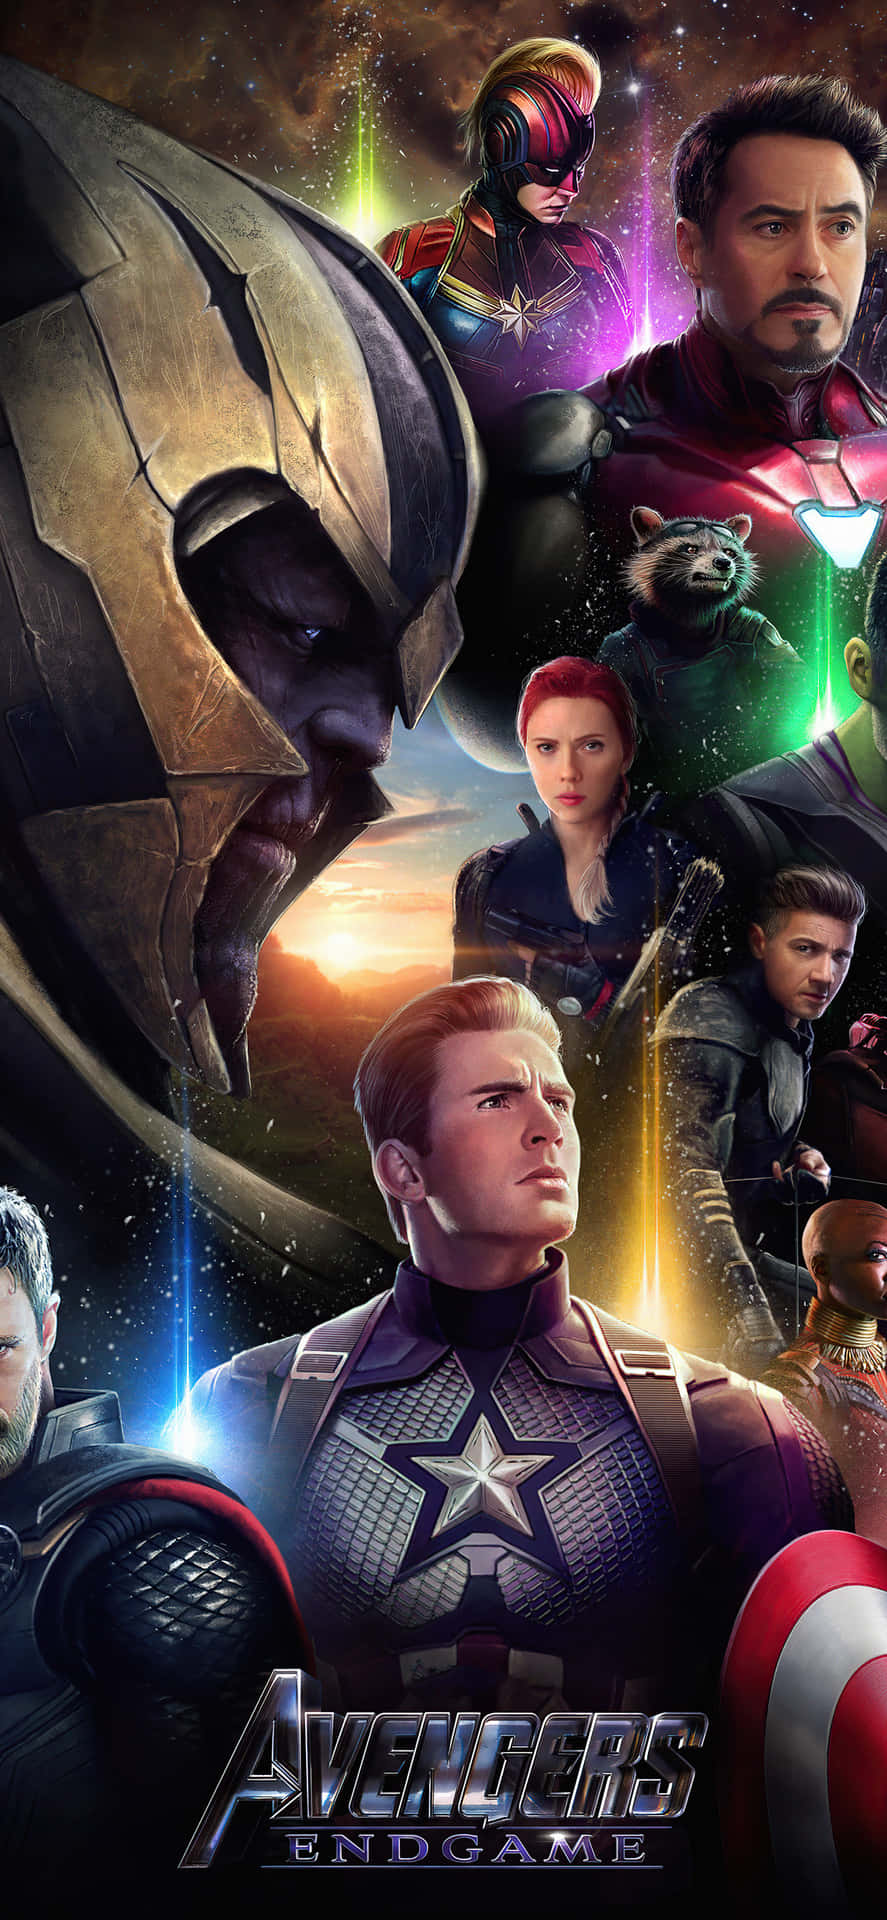 The Avengers assemble to battle evil. Wallpaper